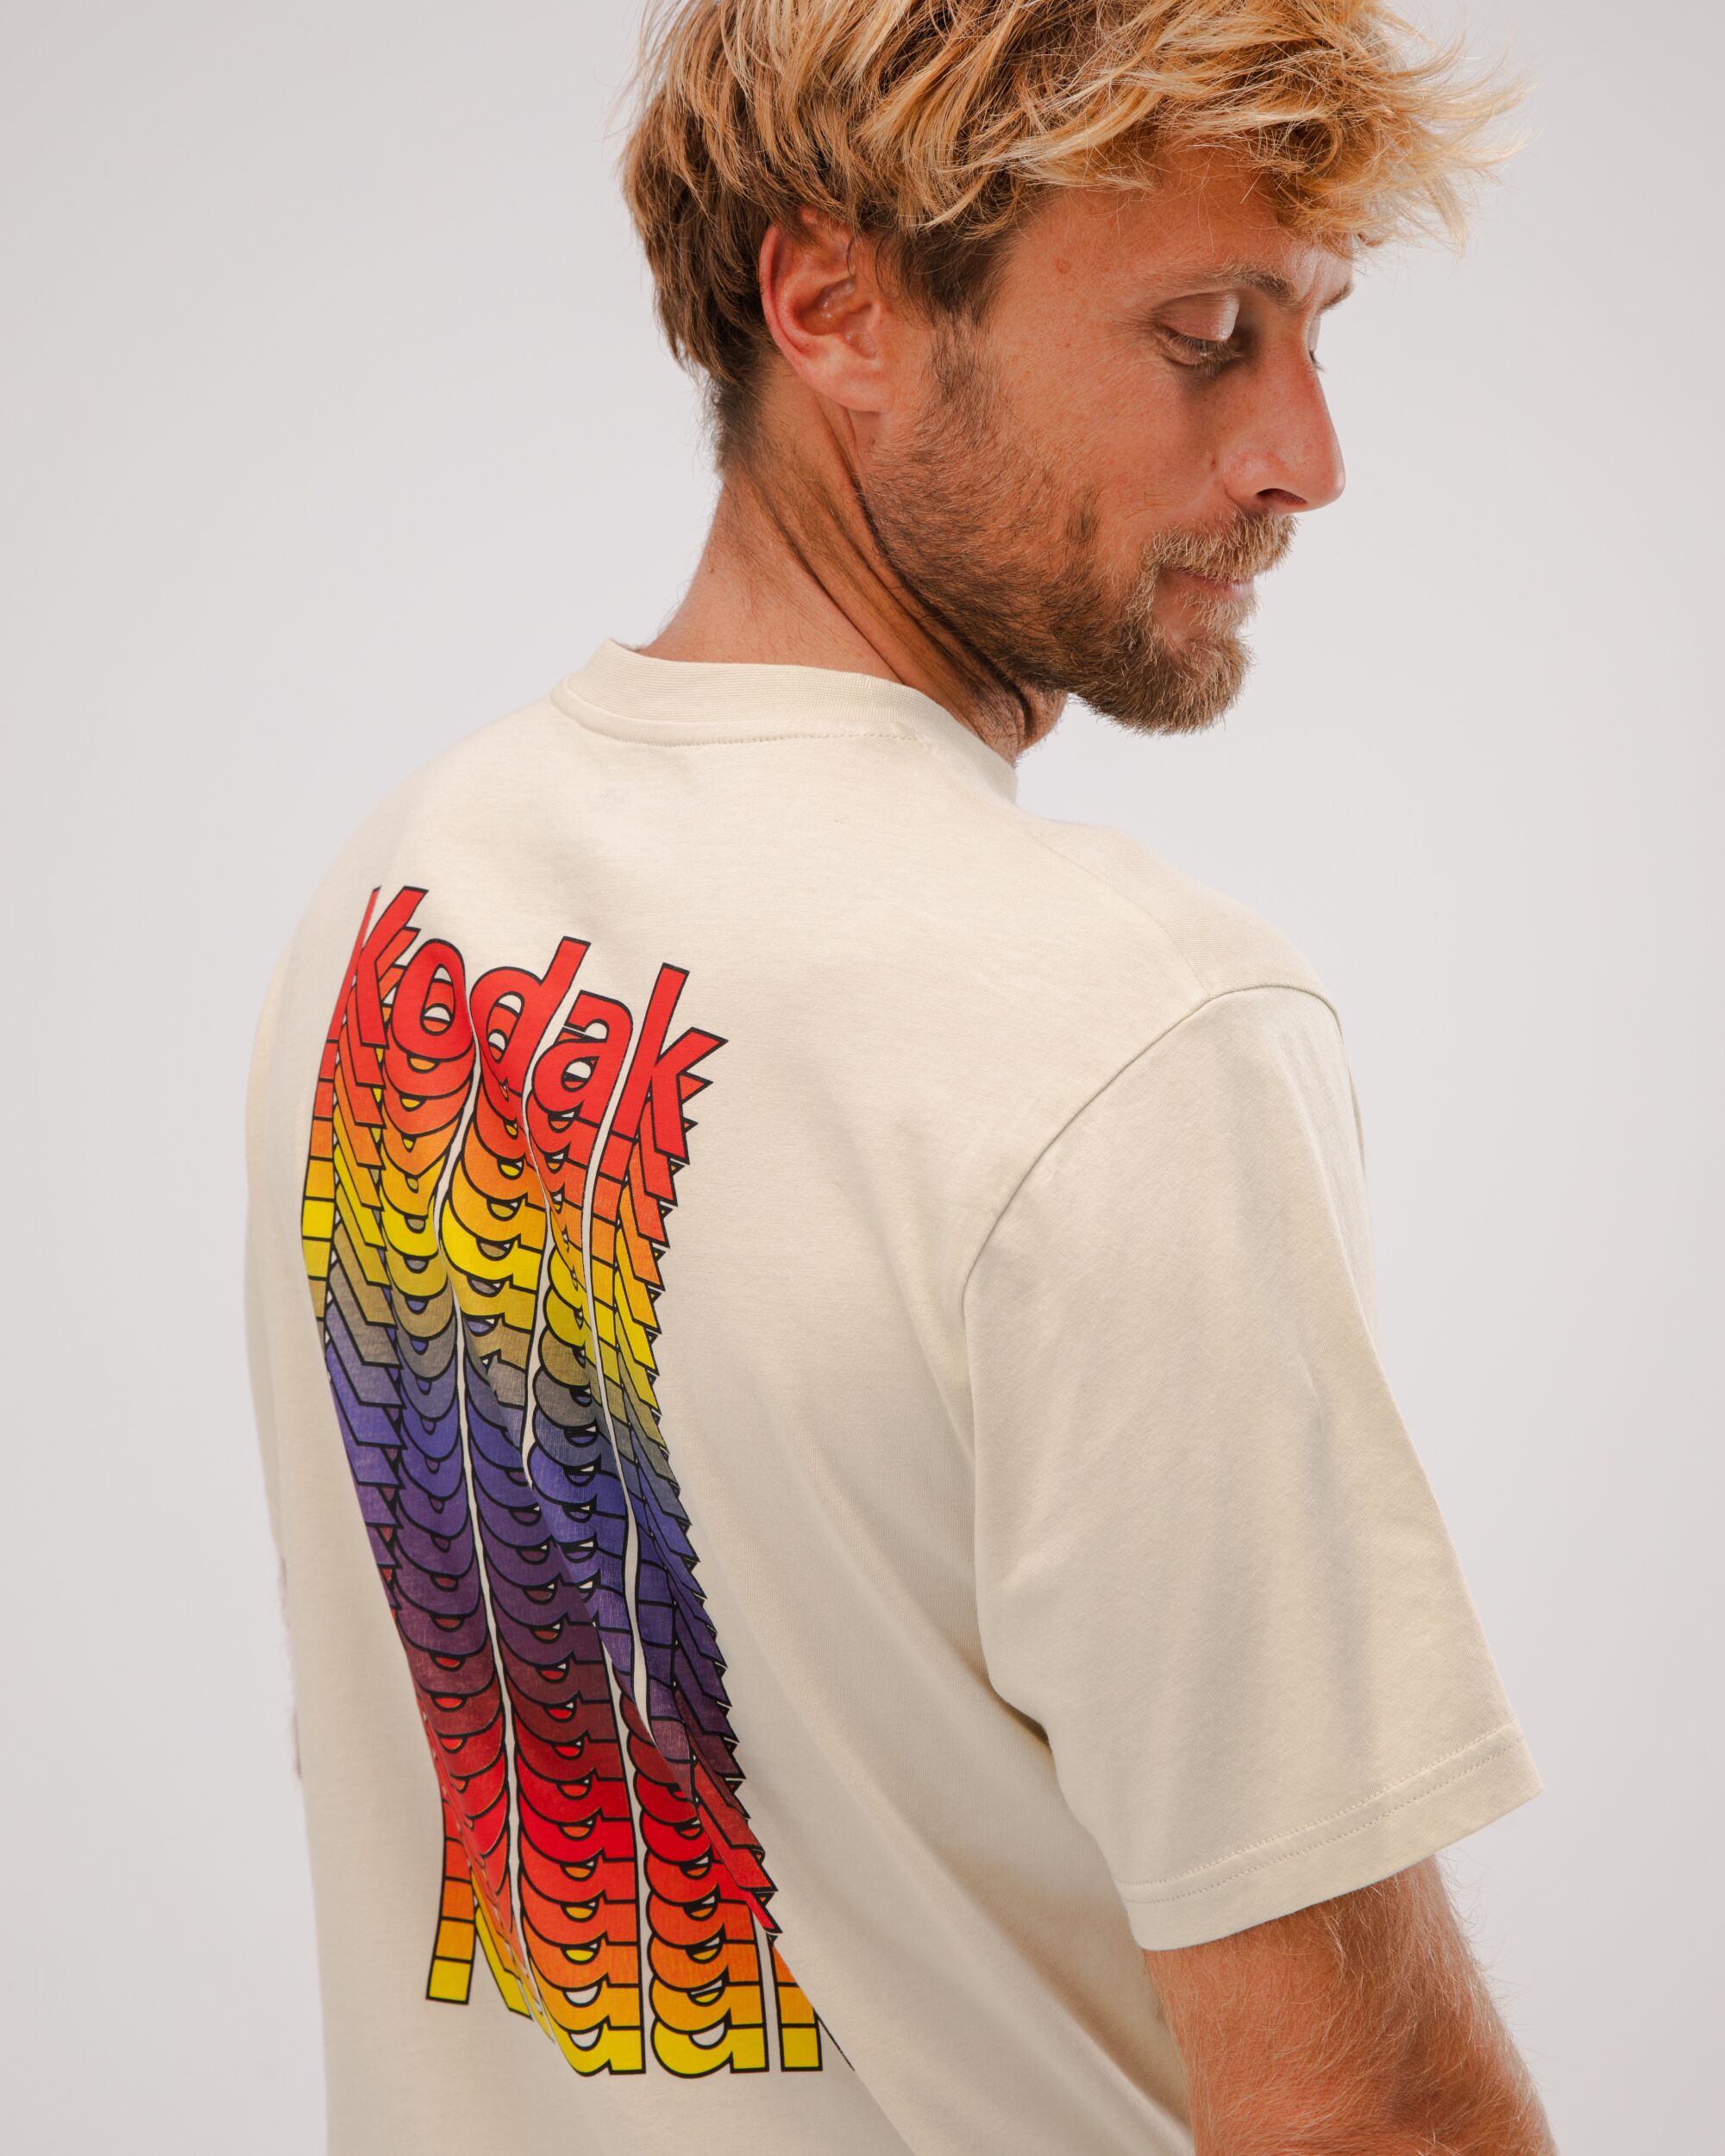 T-shirt Kodak Sable en coton biologique de Brava Fabrics